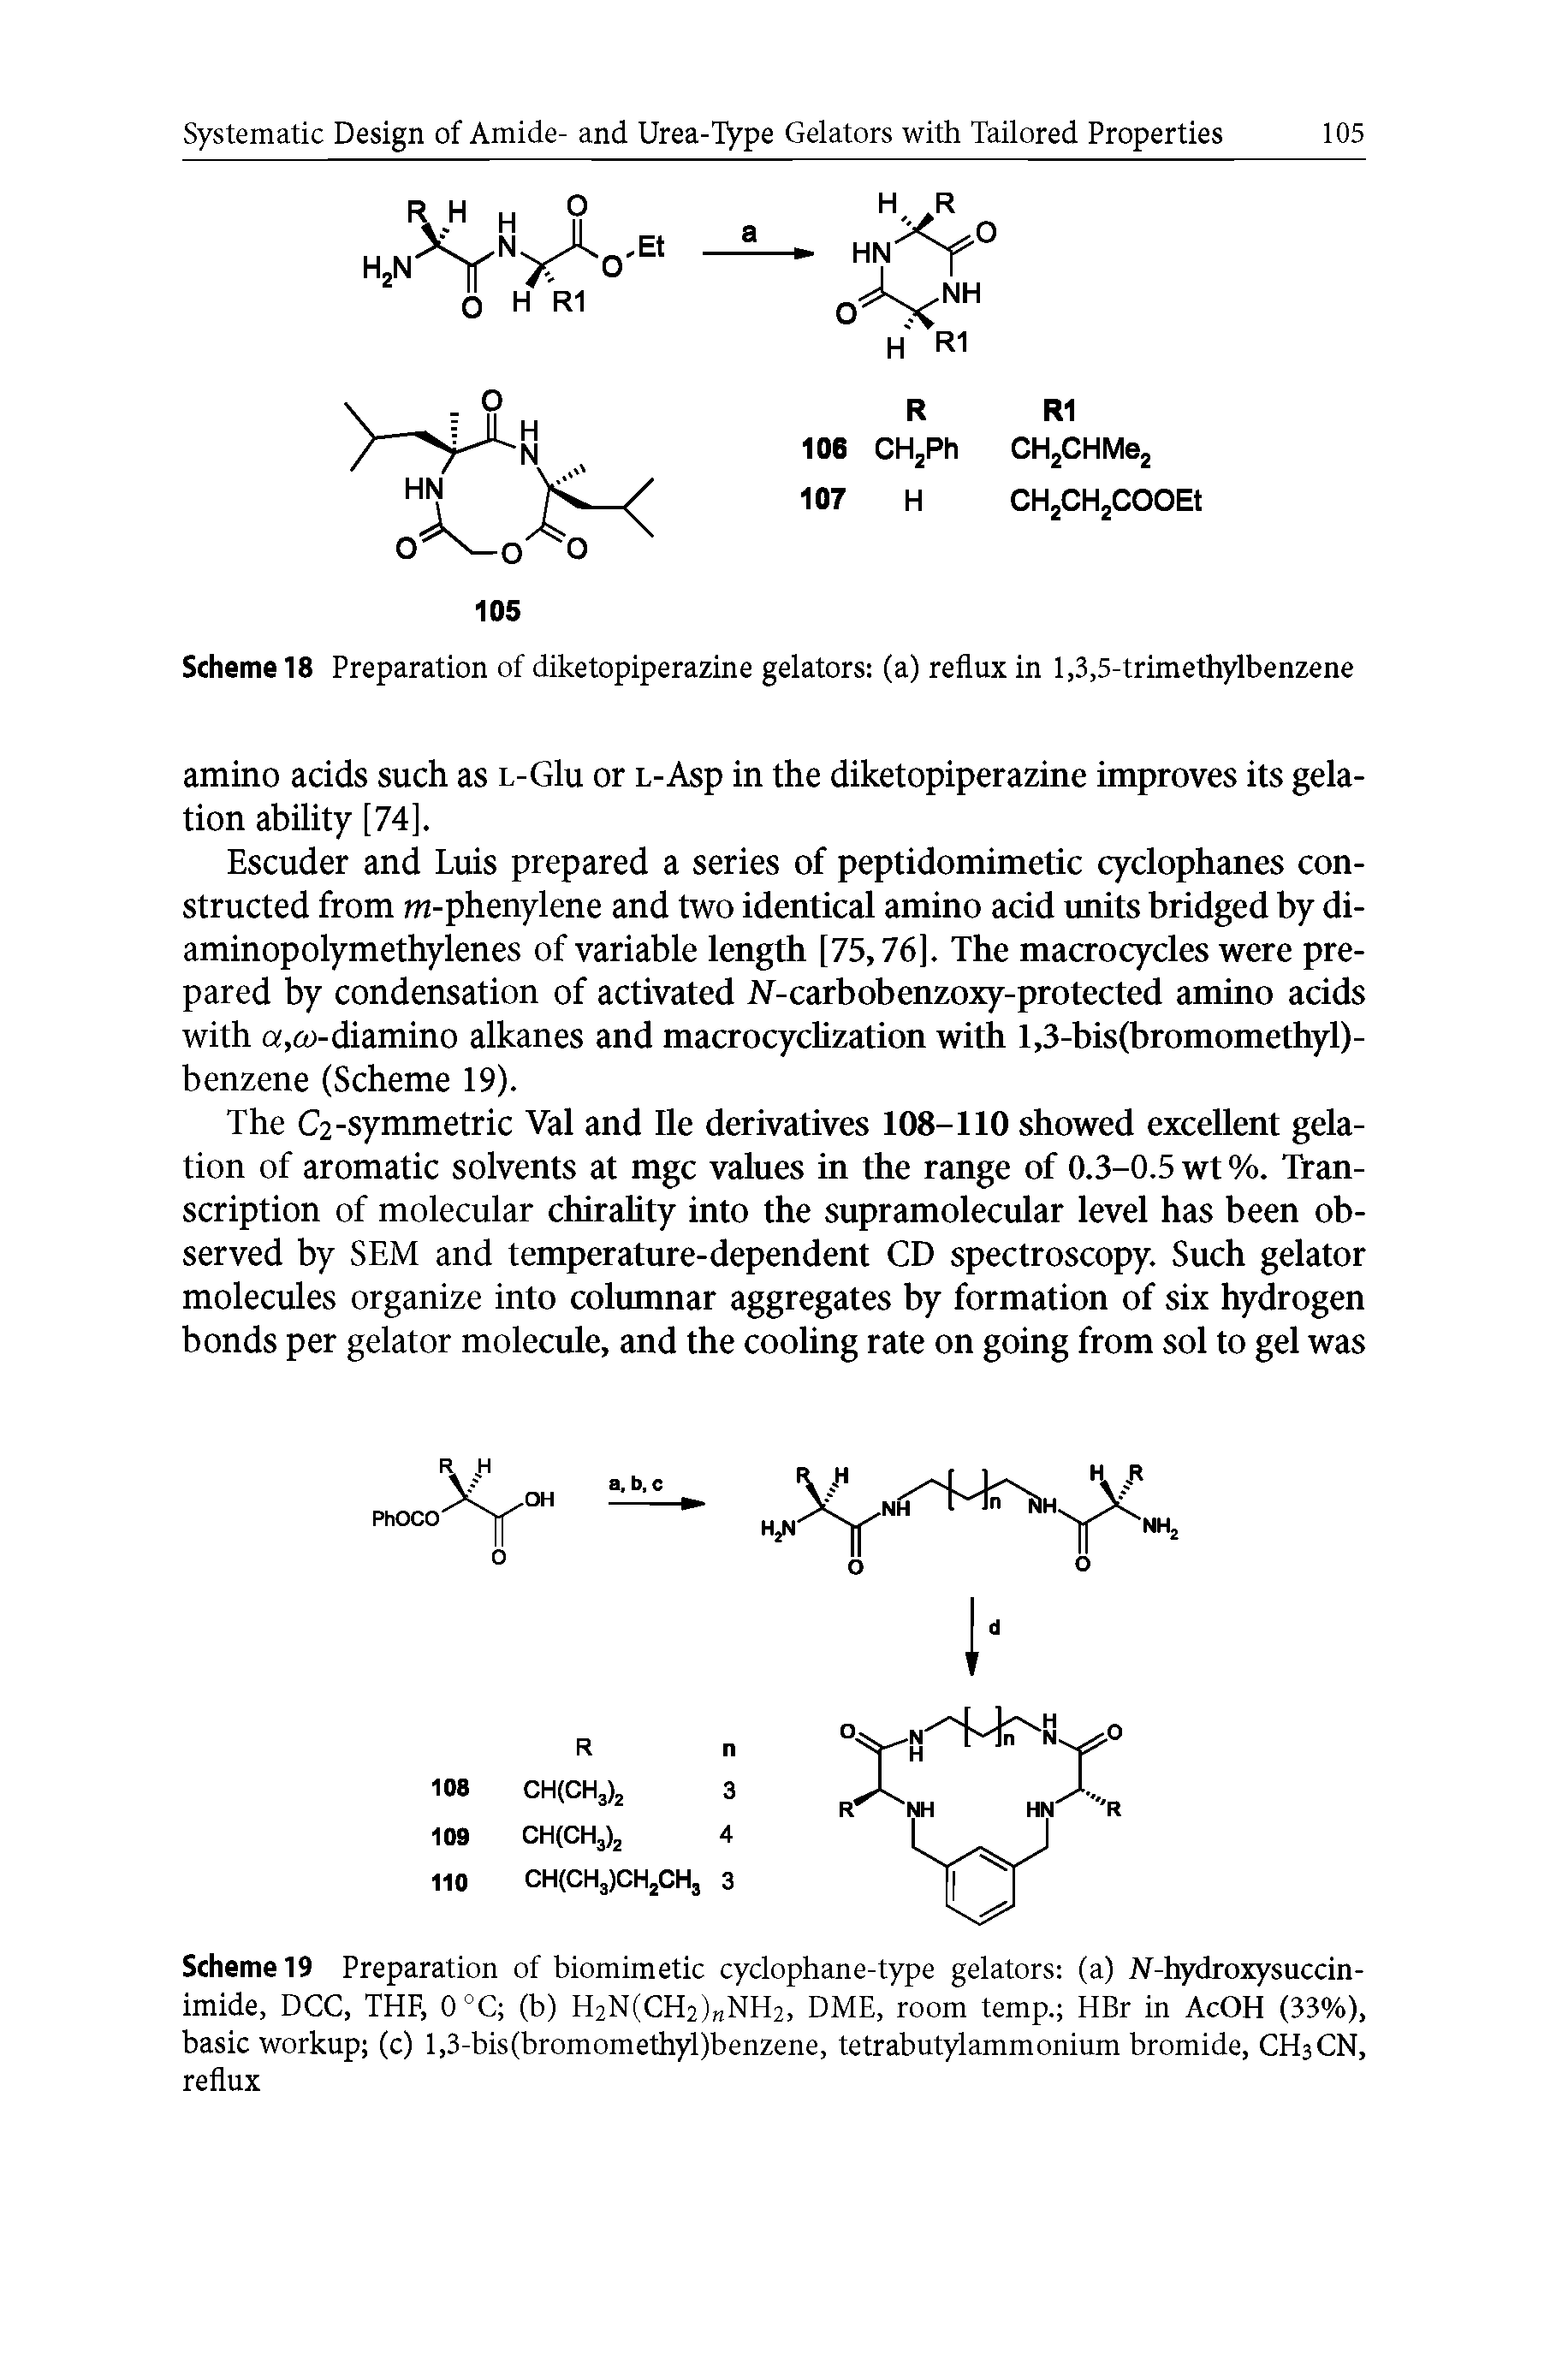 Scheme 19 Preparation of biomimetic cyclophane-type gelators (a) N-hydroxysuccin-imide, DCC, THF, 0°C (b) H2N(CH2)nNH2, DME, room temp. HBr in AcOH (33%), basic workup (c) l,3-bis(bromomethyl)benzene, tetrabutylammonium bromide, CH3CN, reflux...